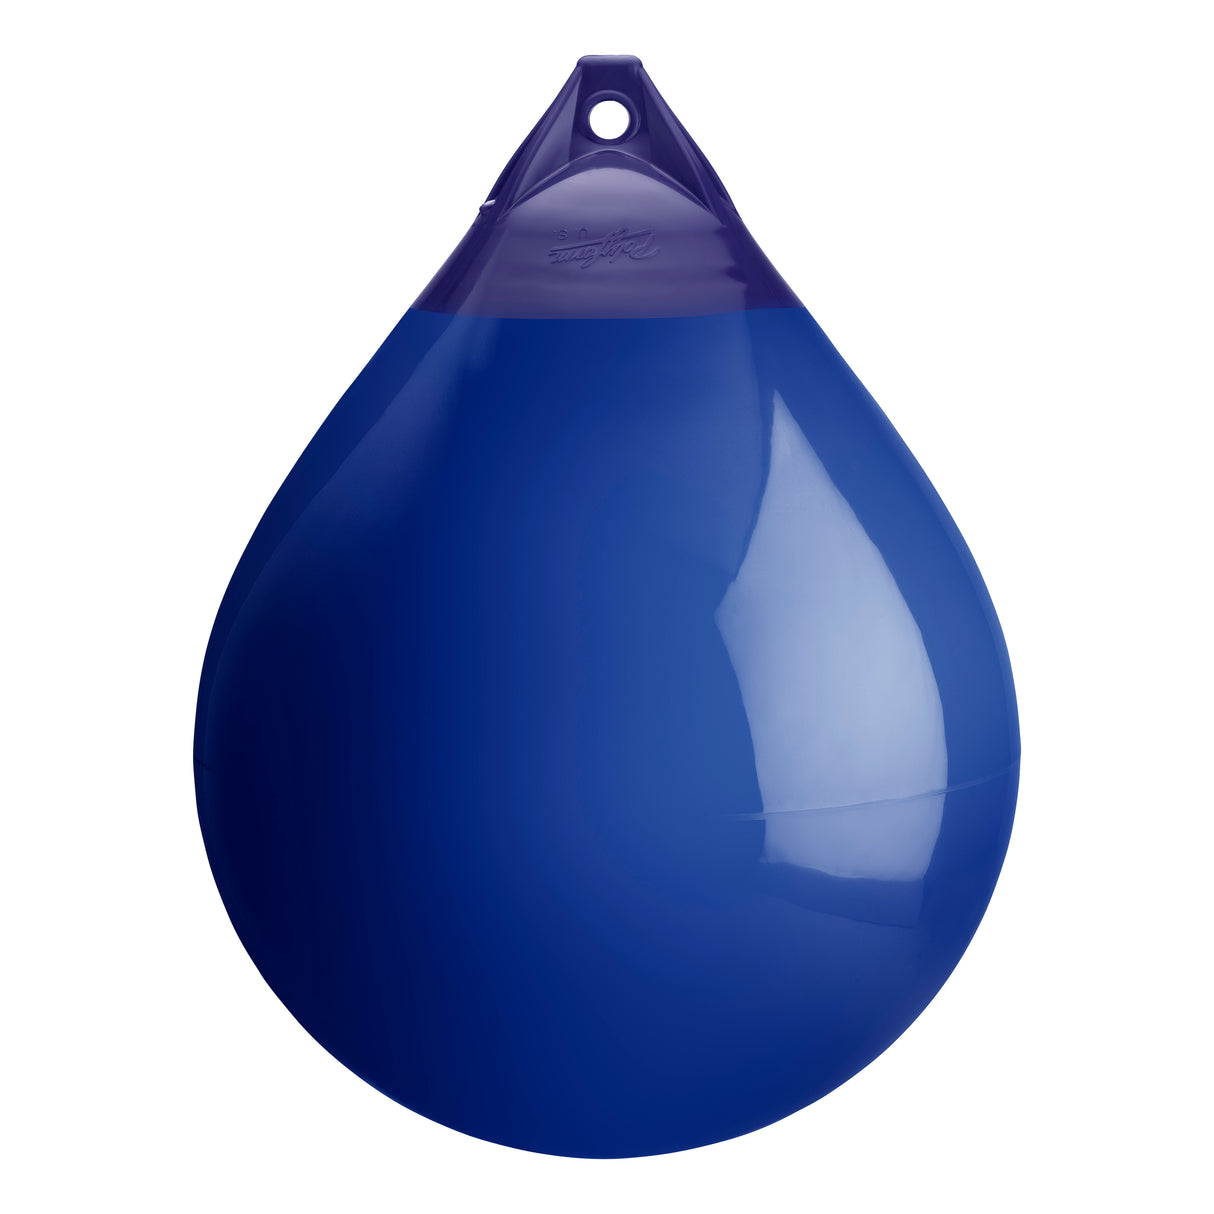 Cobalt Blue inflatable buoy, Polyform A-6 